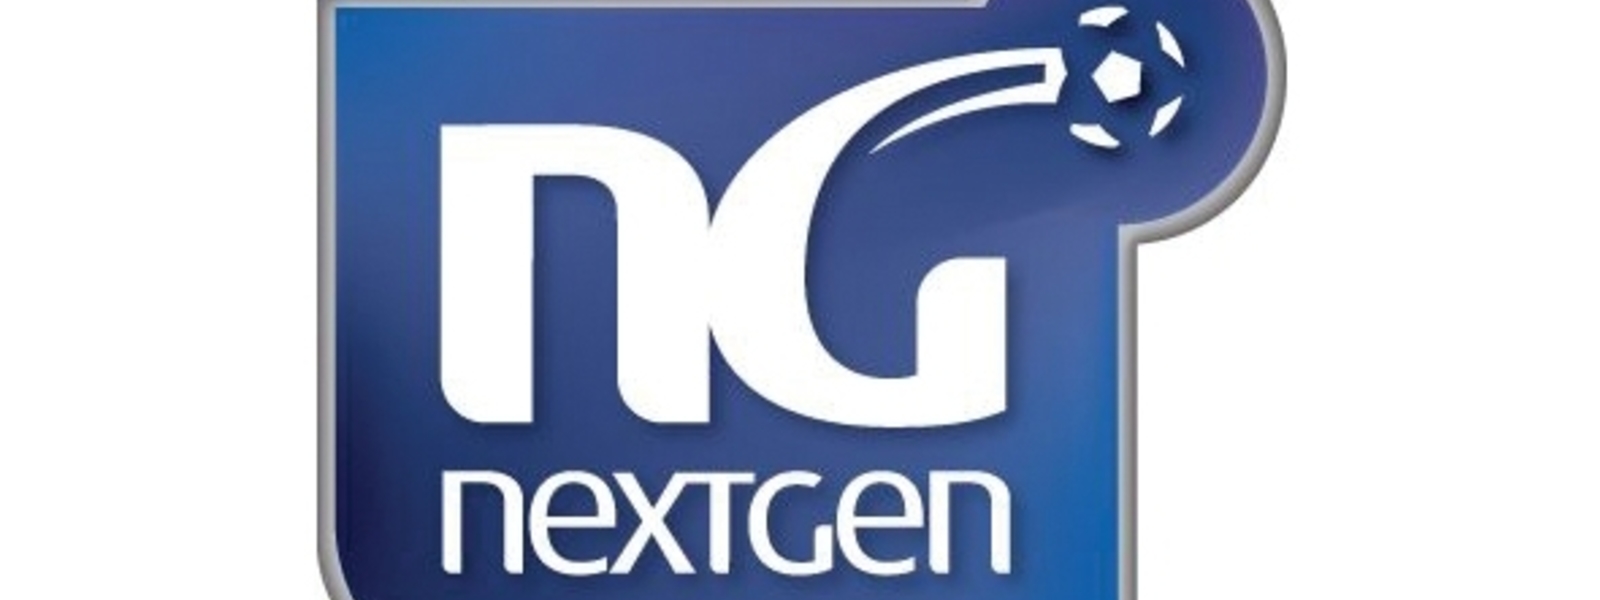 Very big nextgen series logo